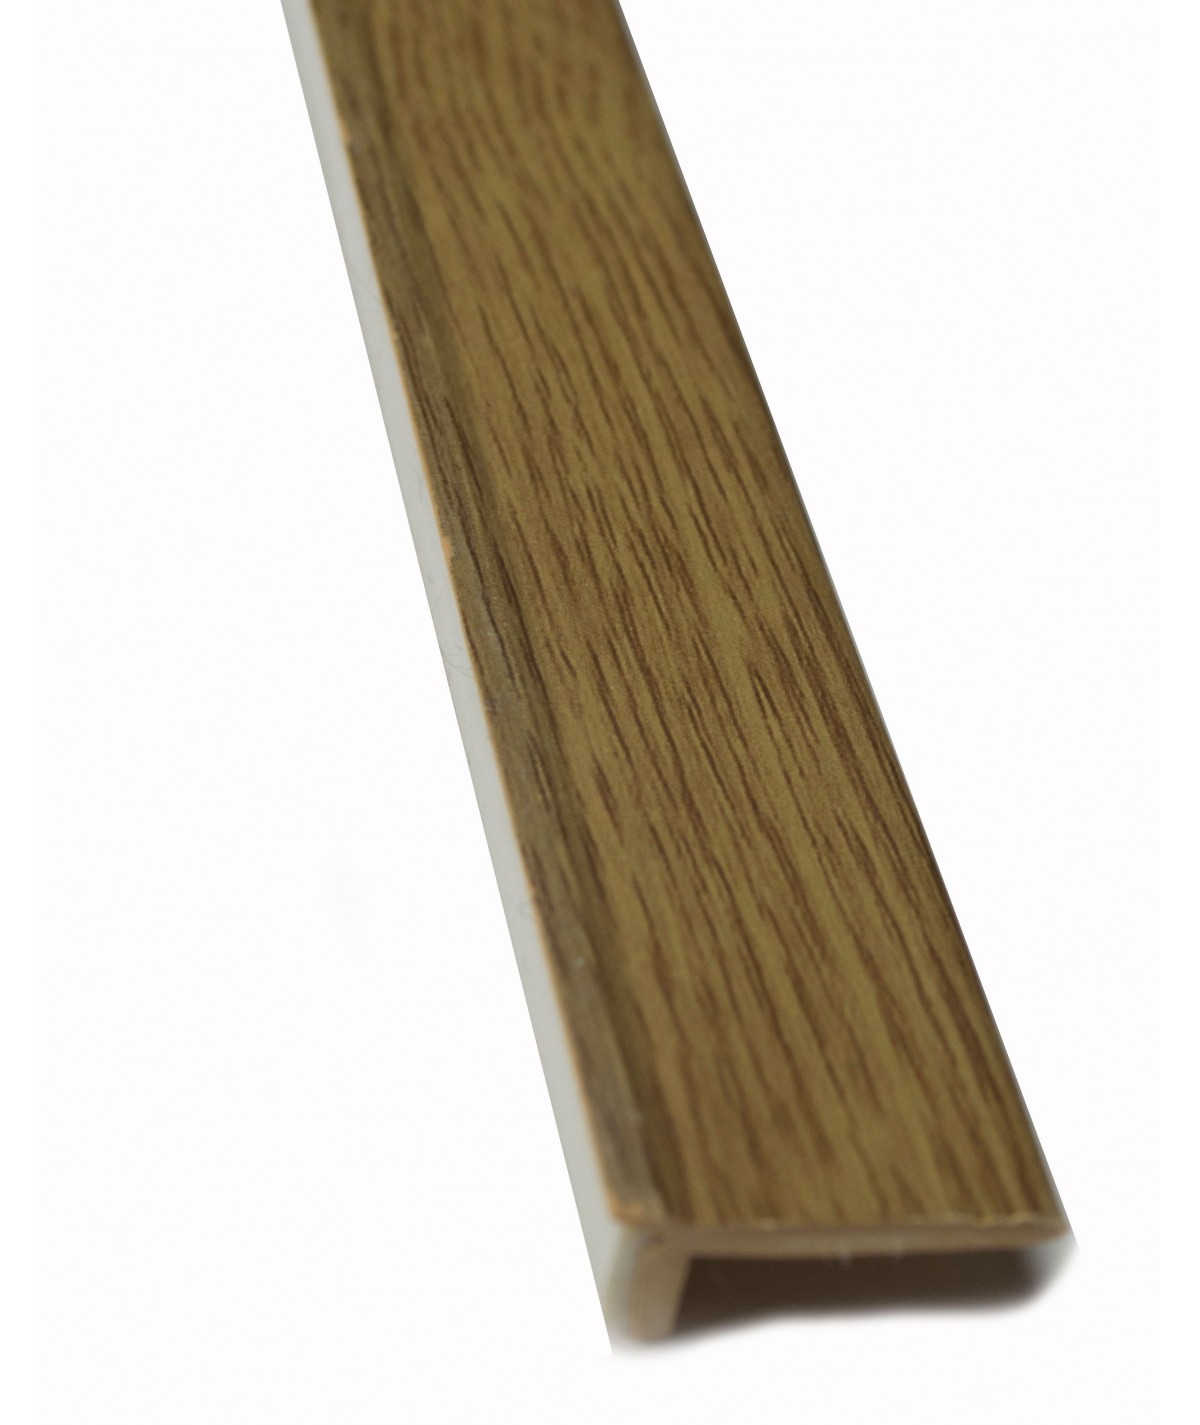 Medium Oak (B) Floor Edge Adhesive Trim 10 x 2Mtr Lengths Bridge Gap Between Floor and Skirting